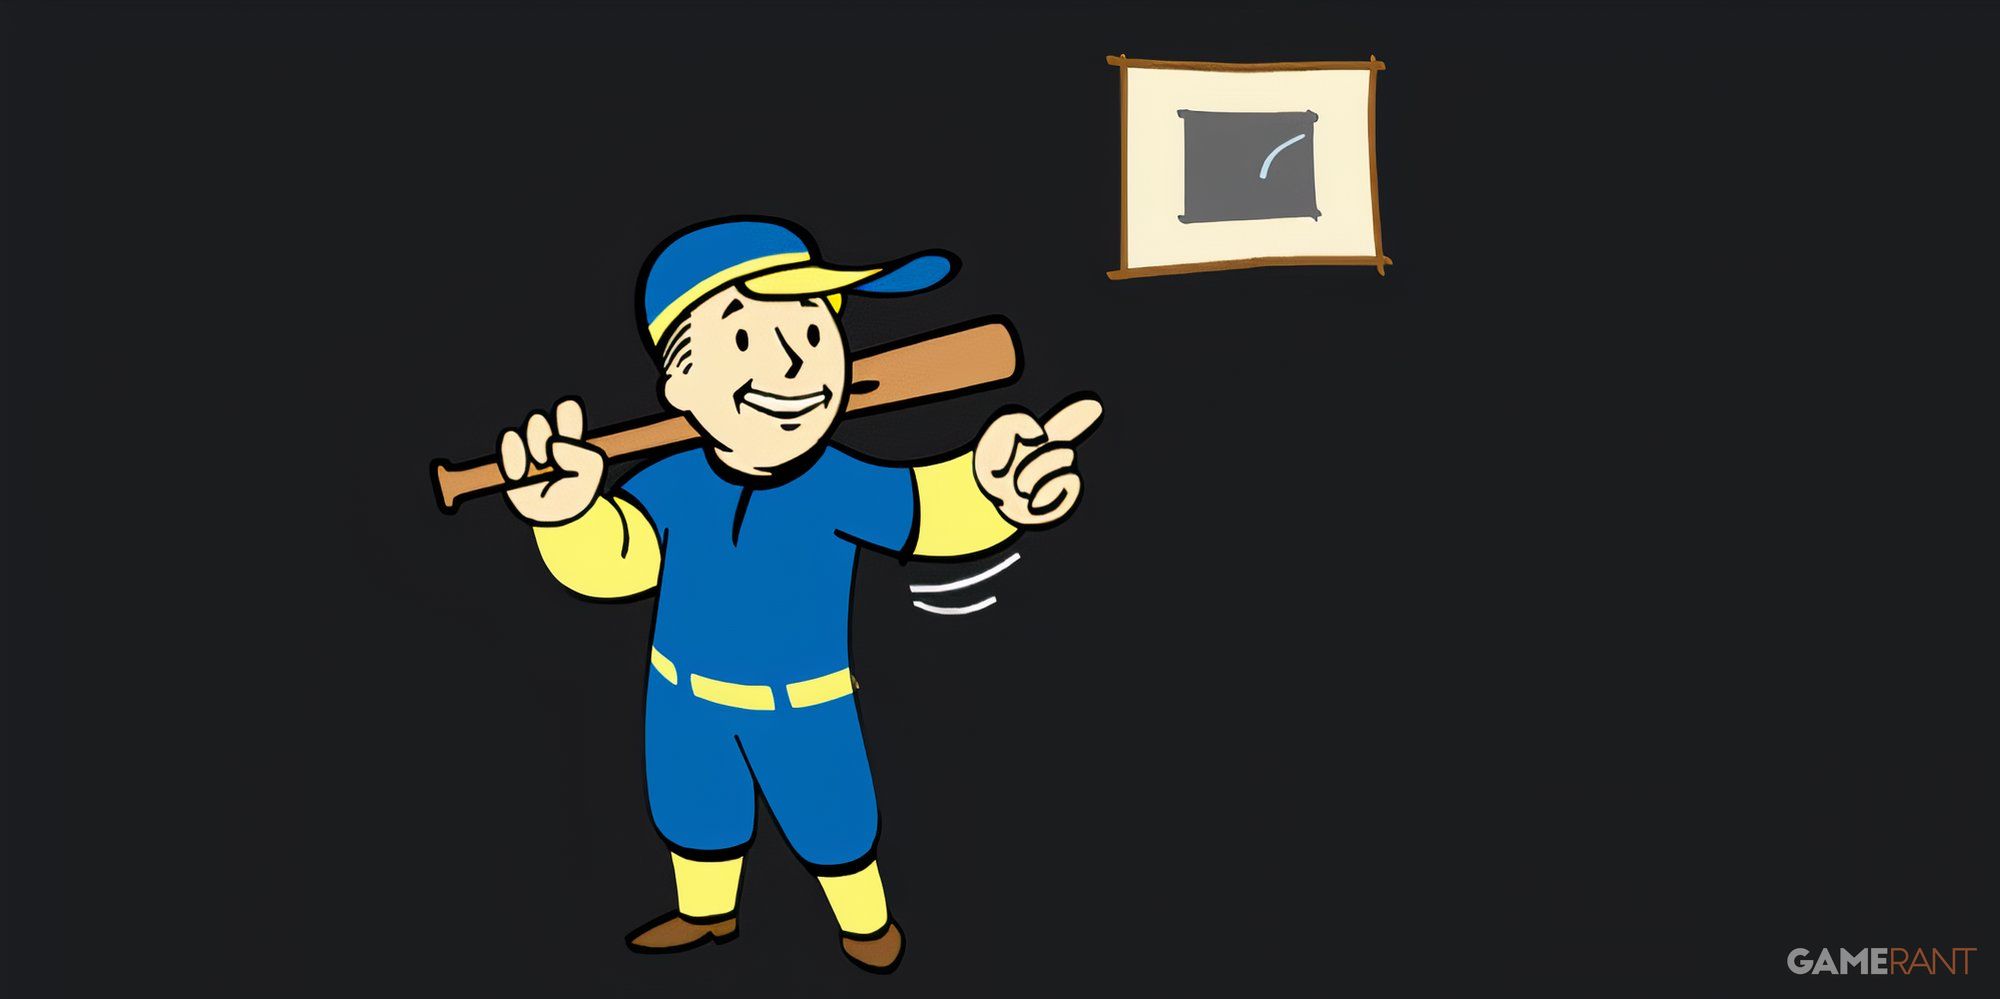 Vault Boy is wearing a baseball uniform and holds a baseball bat over his shoulder